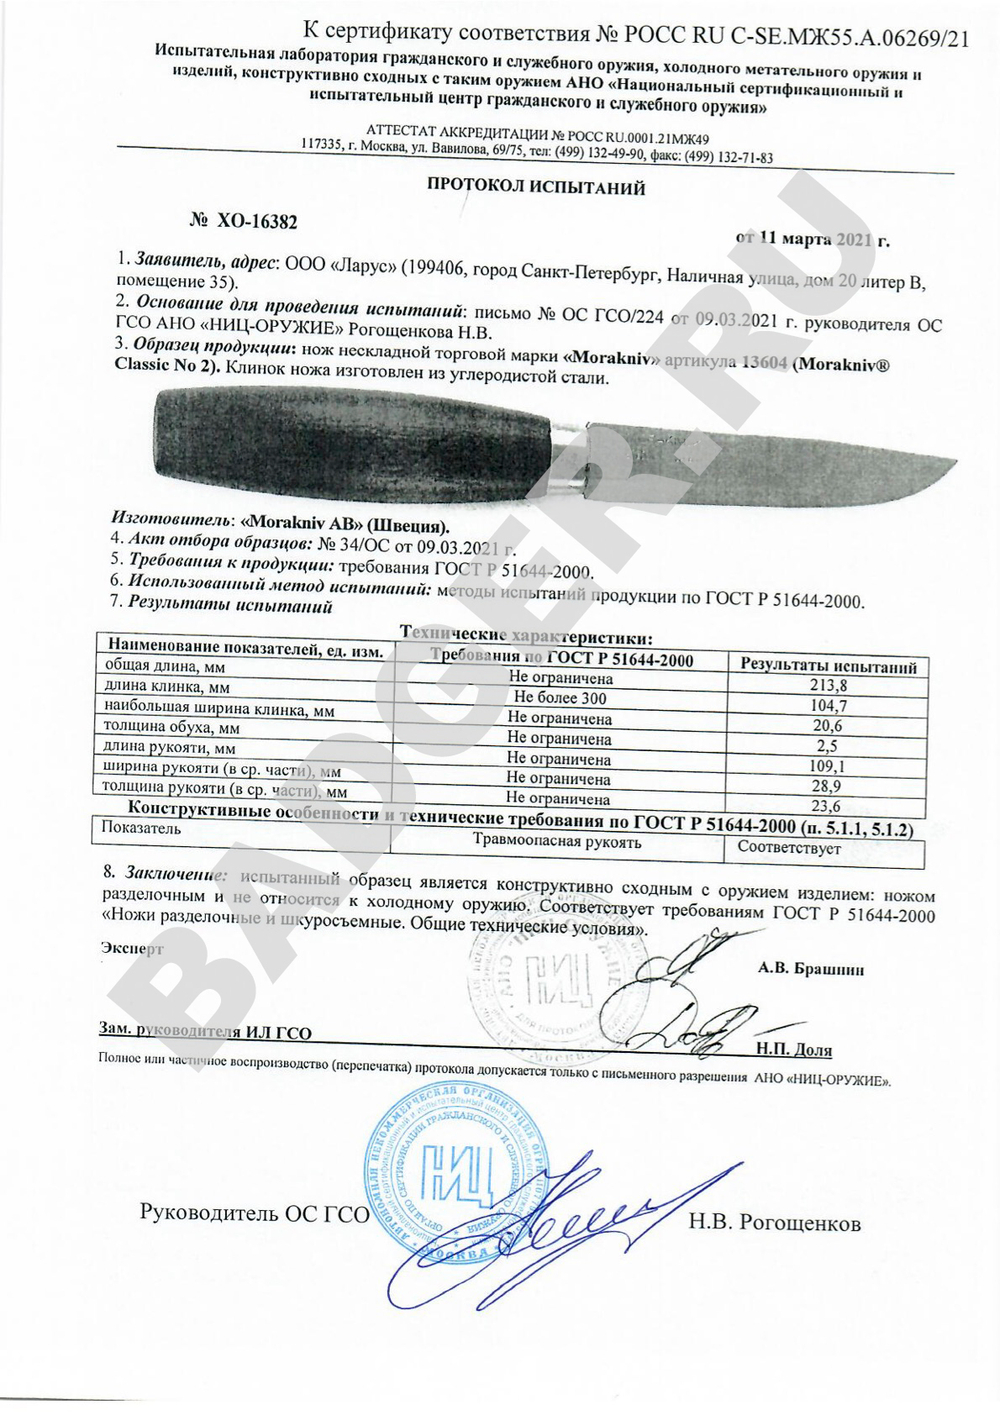 Нож Morakniv Classic №2 (C), арт. 13604